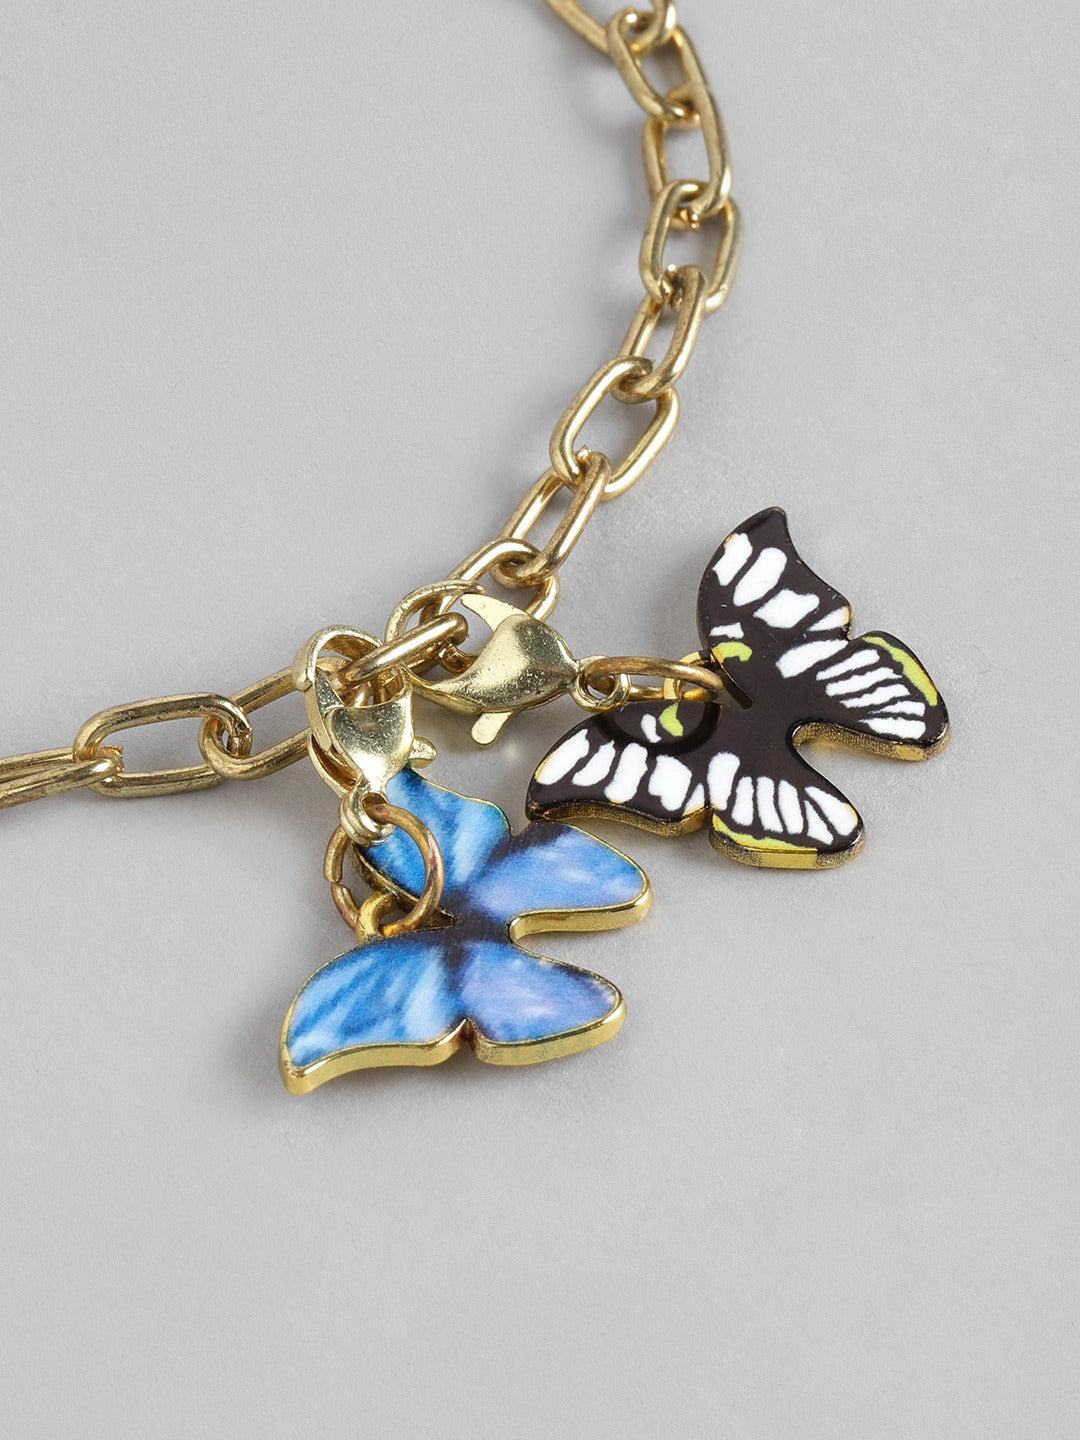 Blueberry butterfly pendant chain bracelet